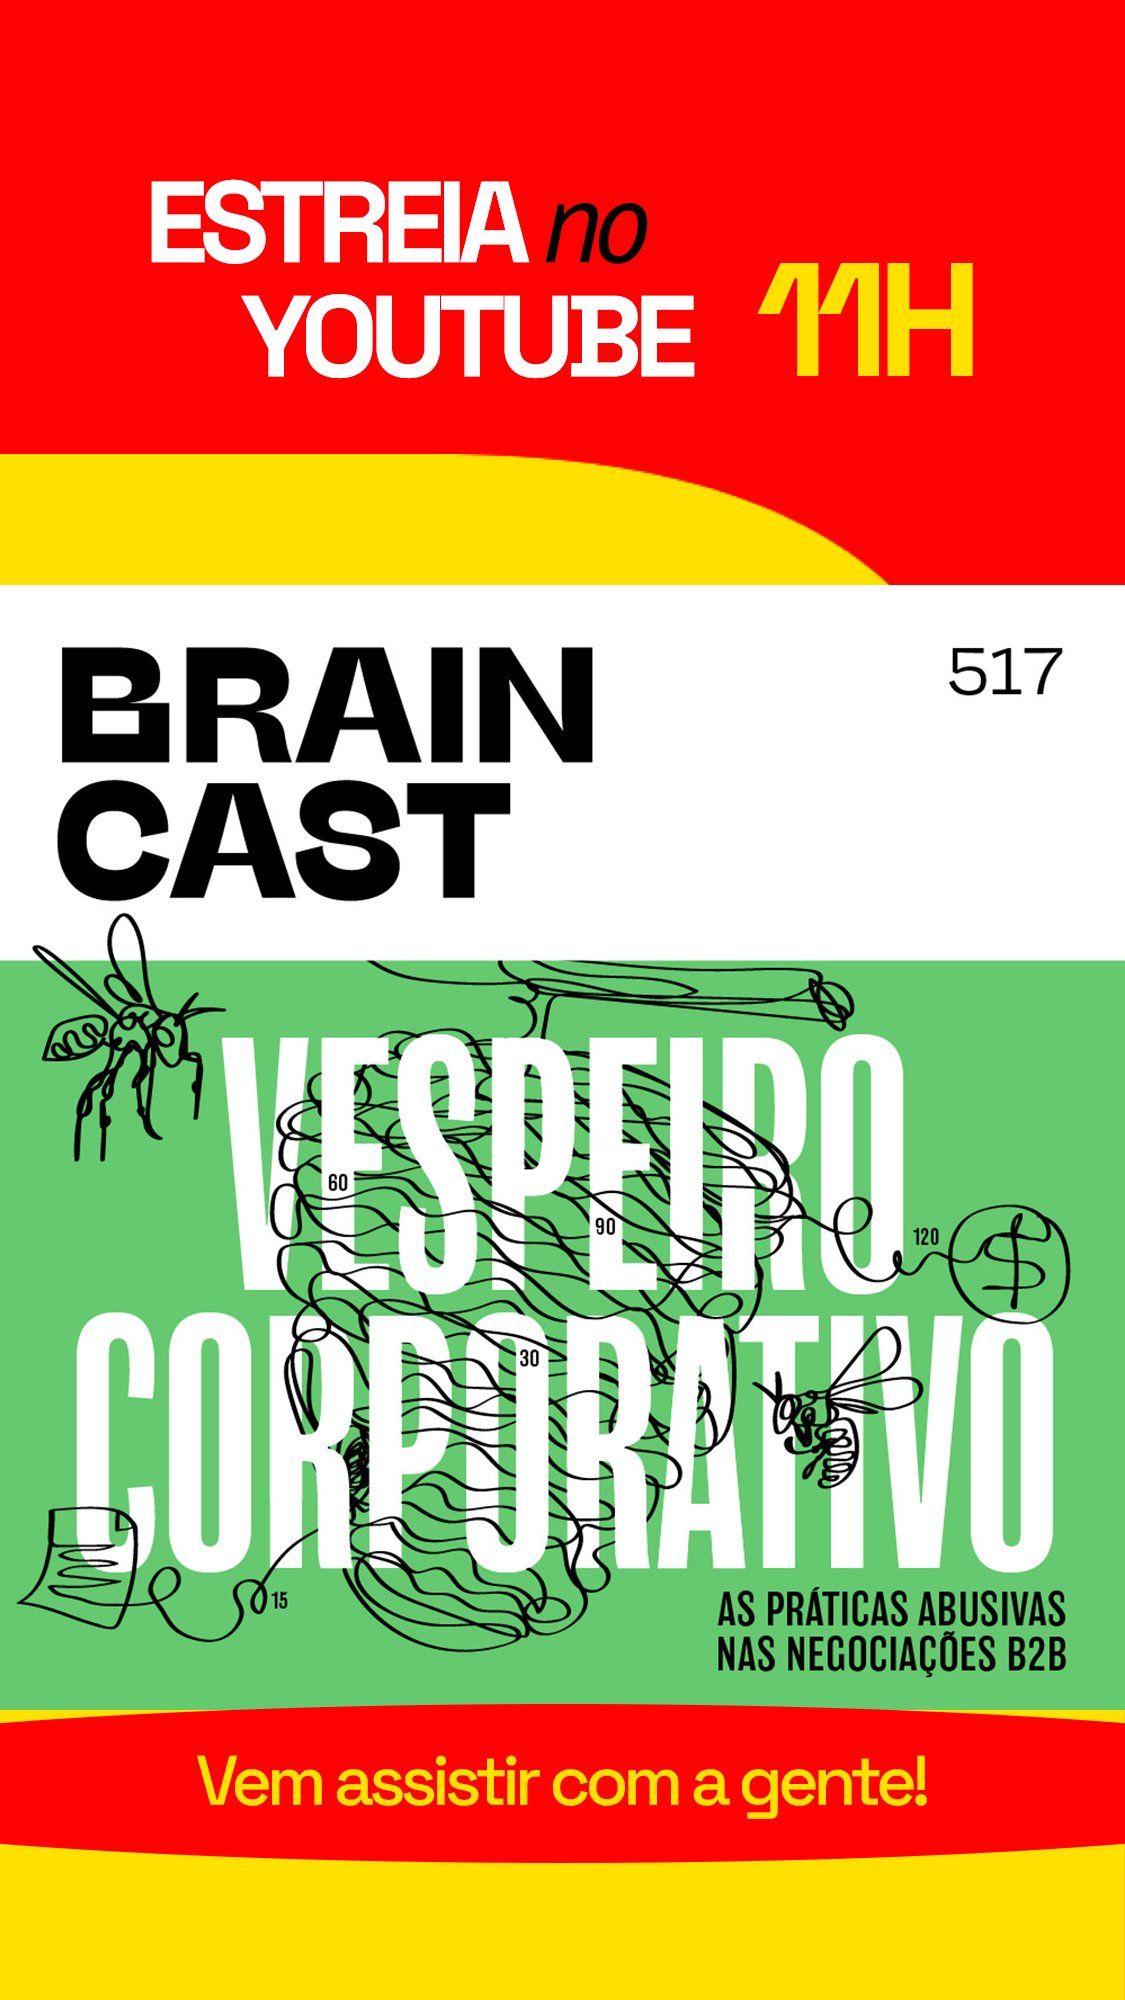 Braincast 343 - Topzera 2019 • B9